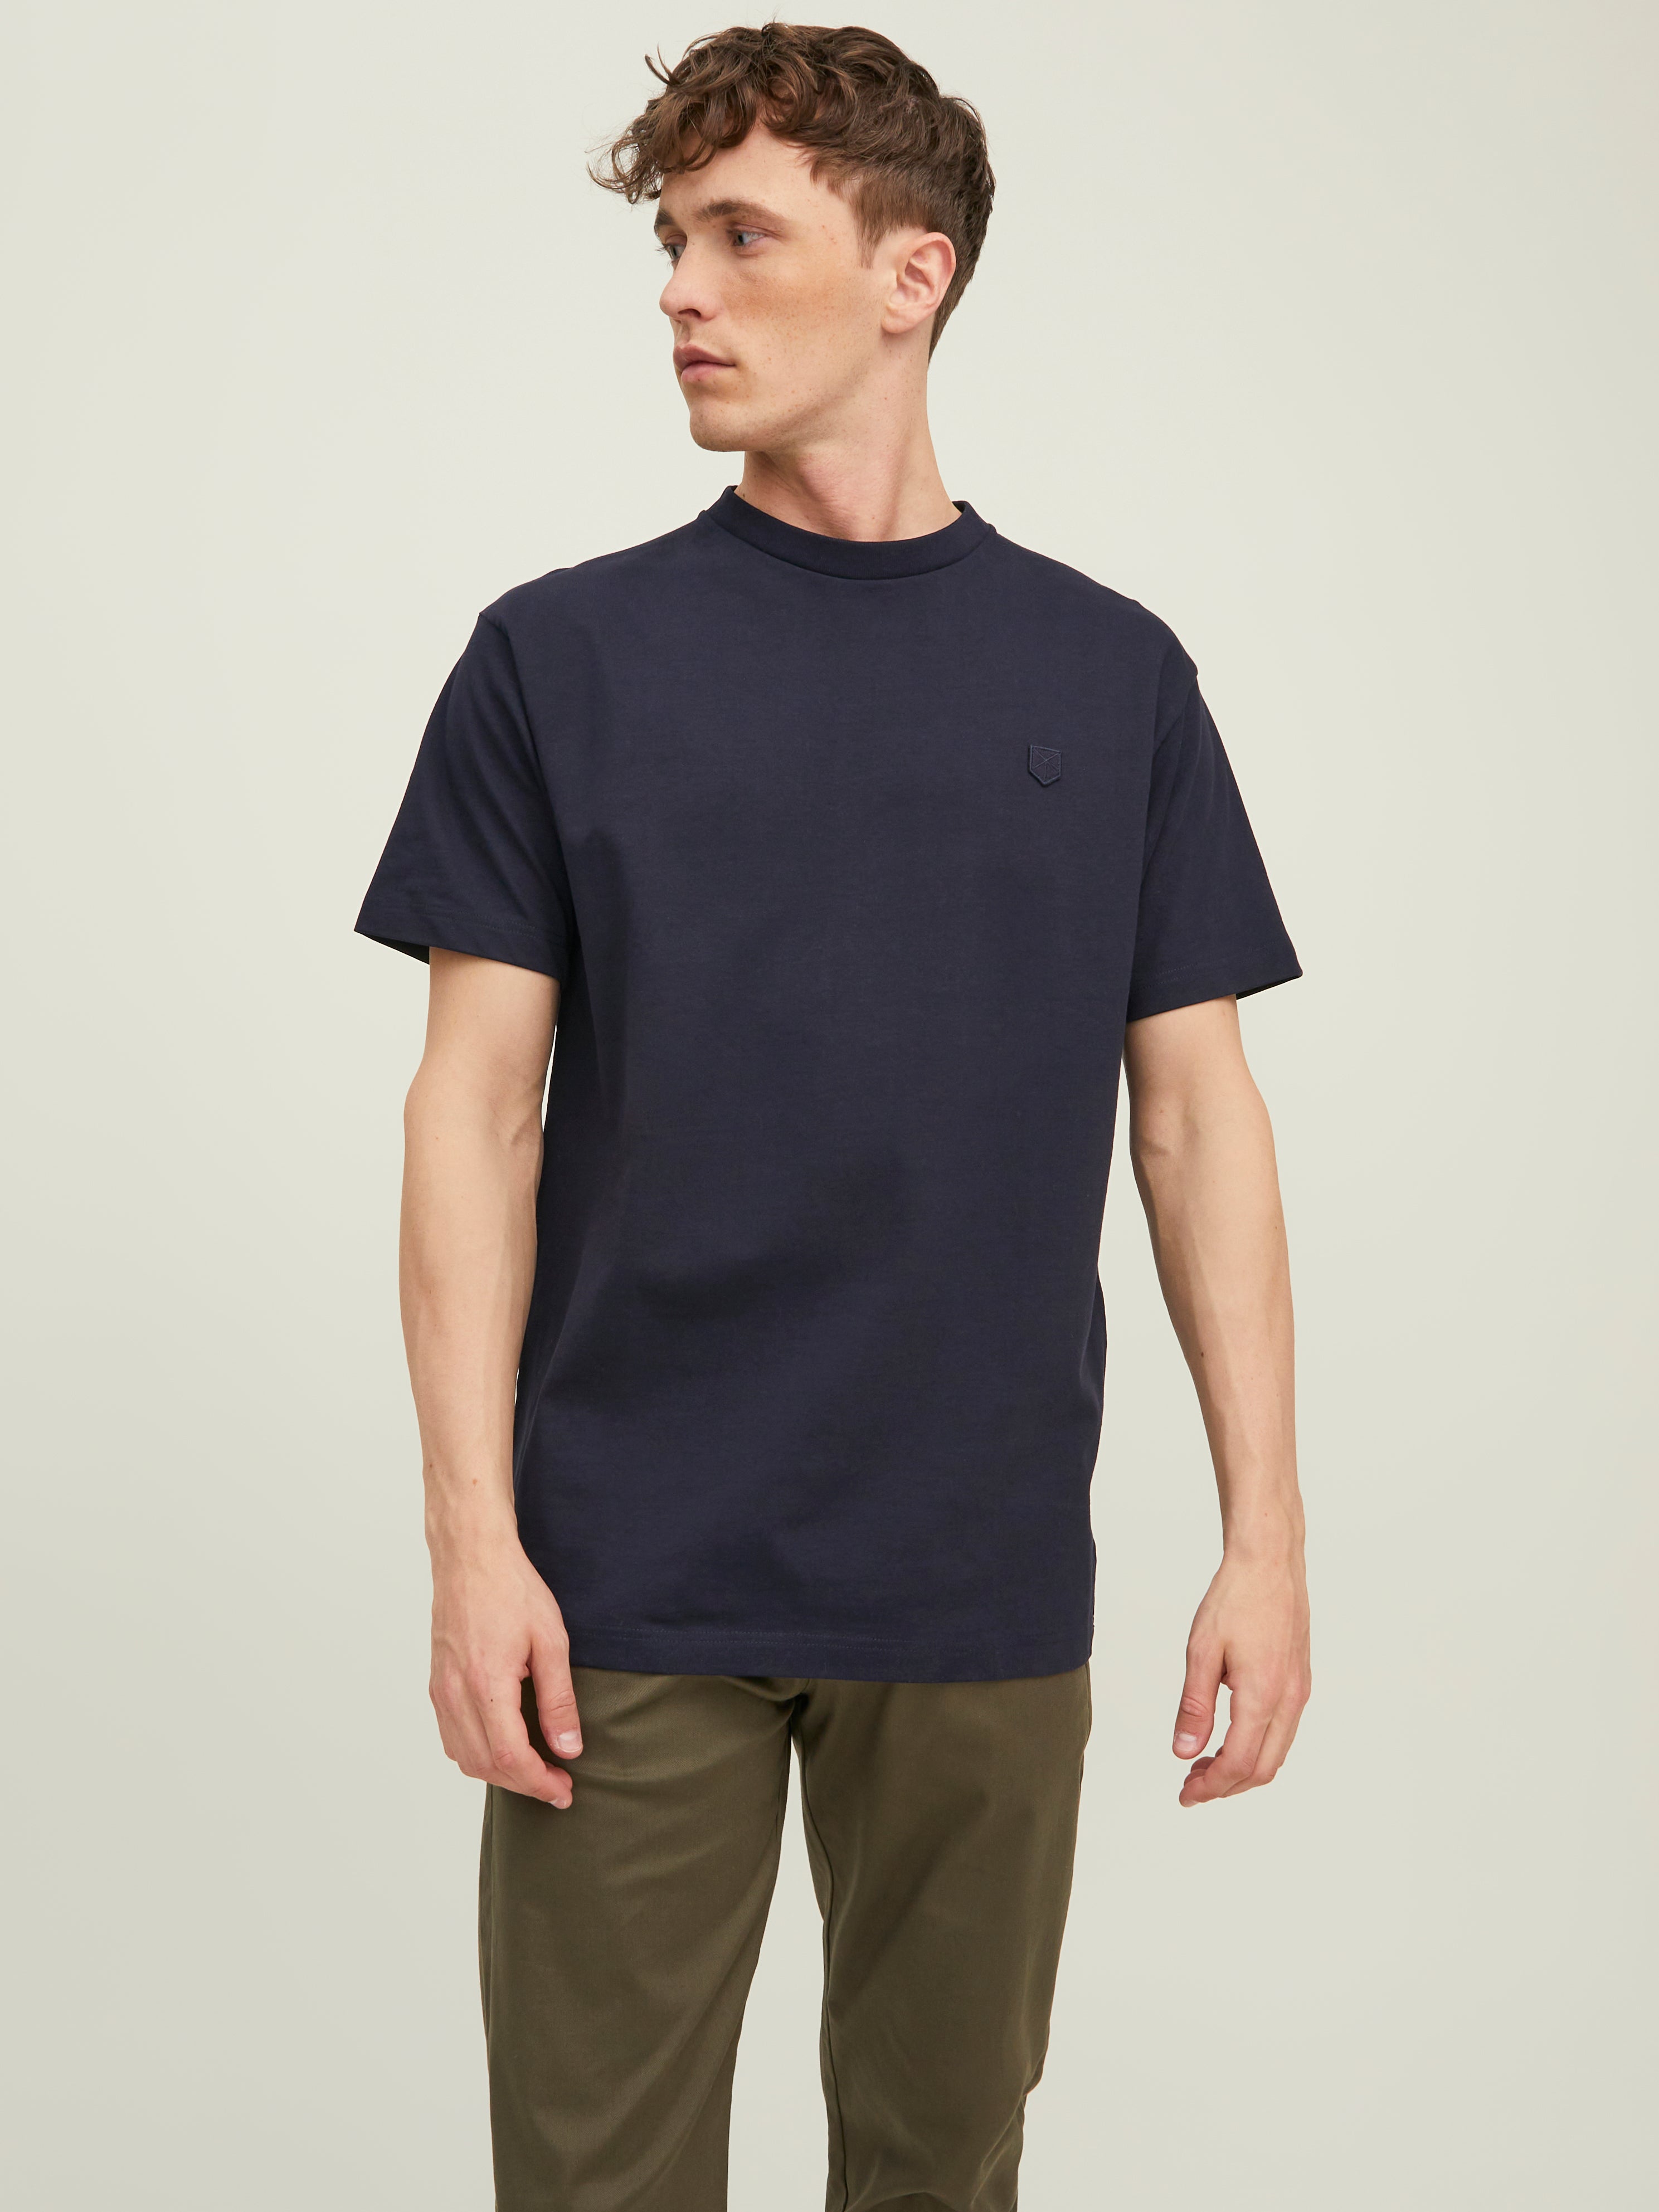 Jack & Jones T-shirt MEN FASHION Shirts & T-shirts Casual Navy Blue M discount 54% 